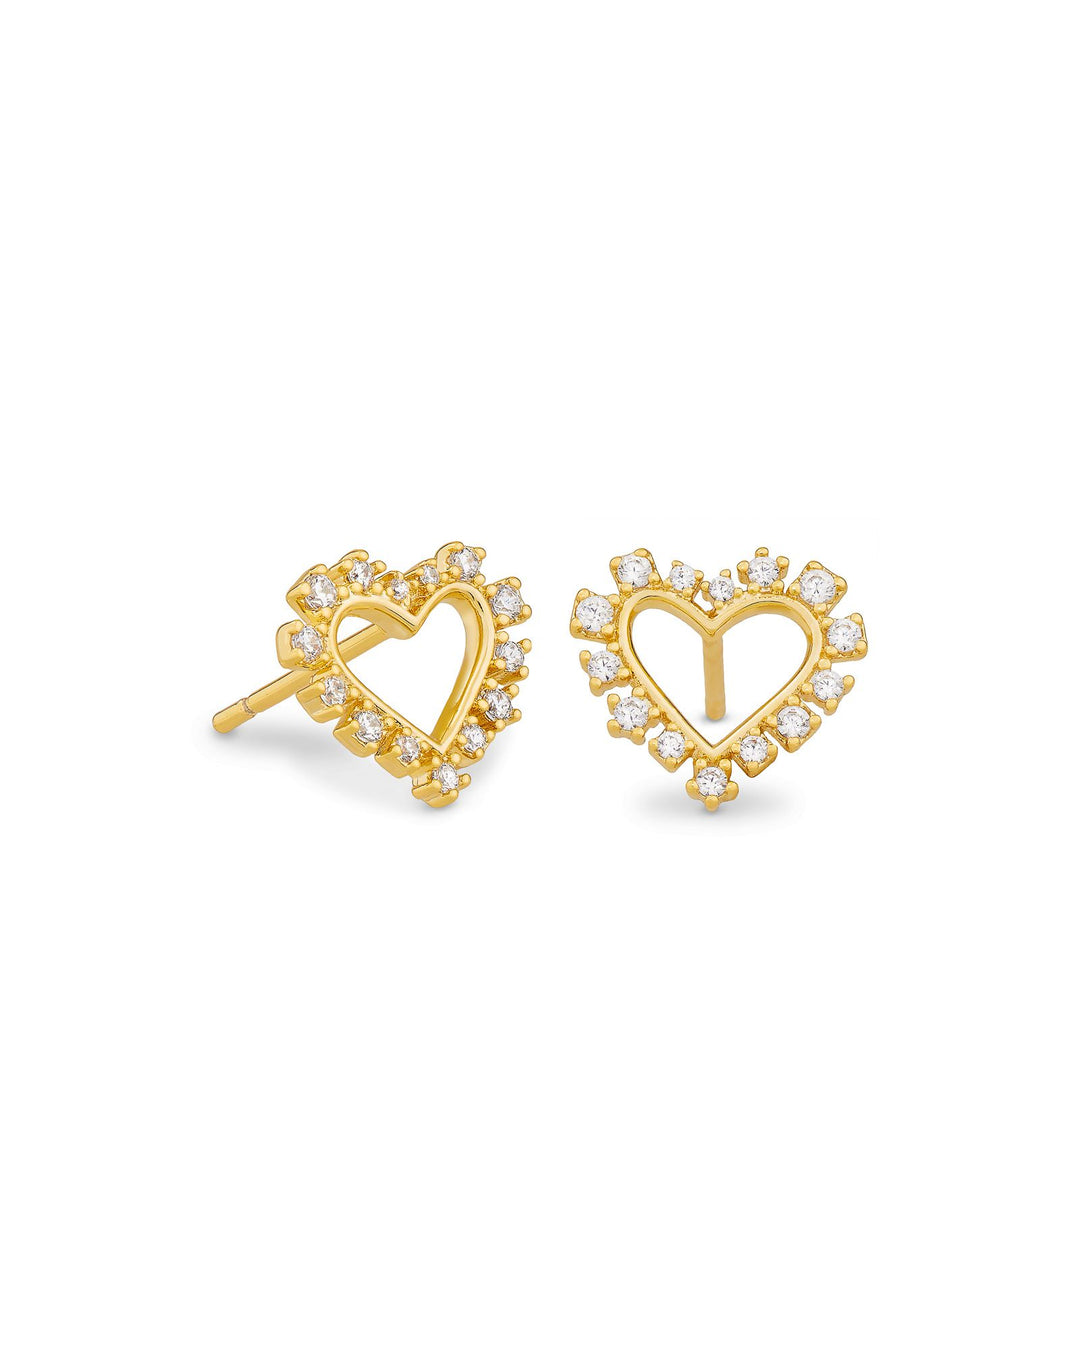 Kendra Scott Ari Heart Crystal Stud Earrings in Gold